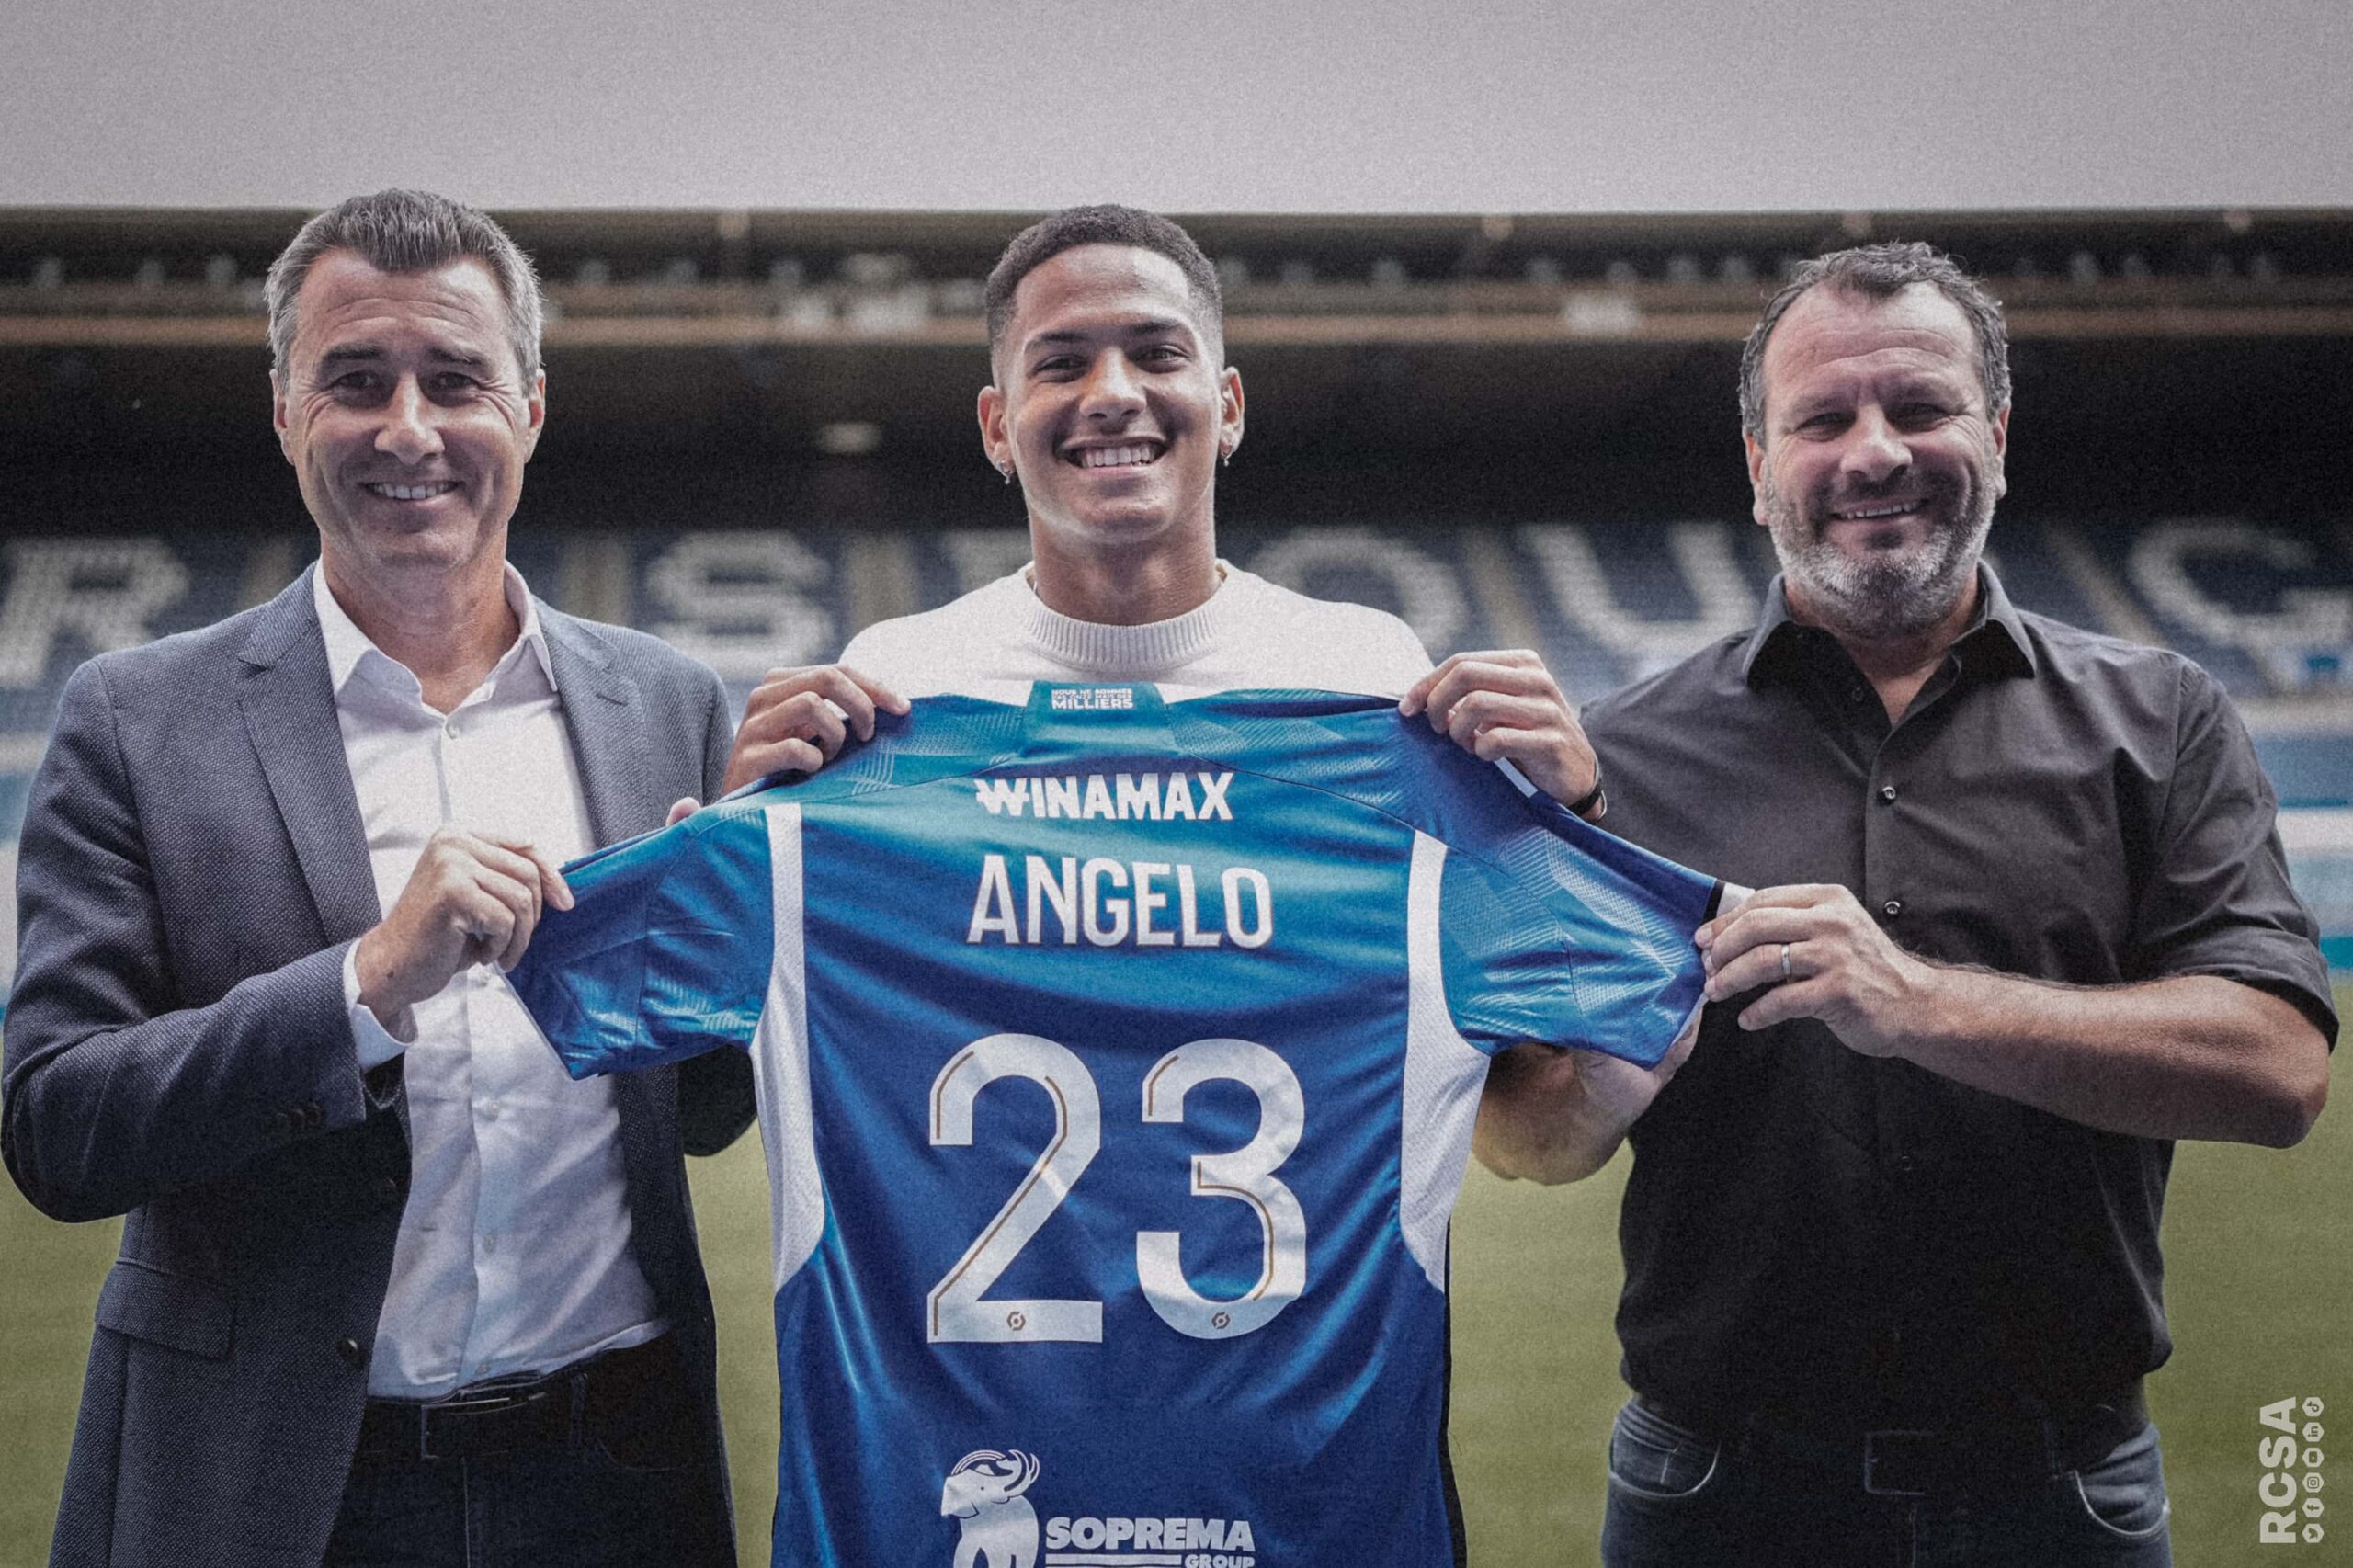 Brazilian Ângelo Gabriel loaned to Strasbourg - Racing Club de